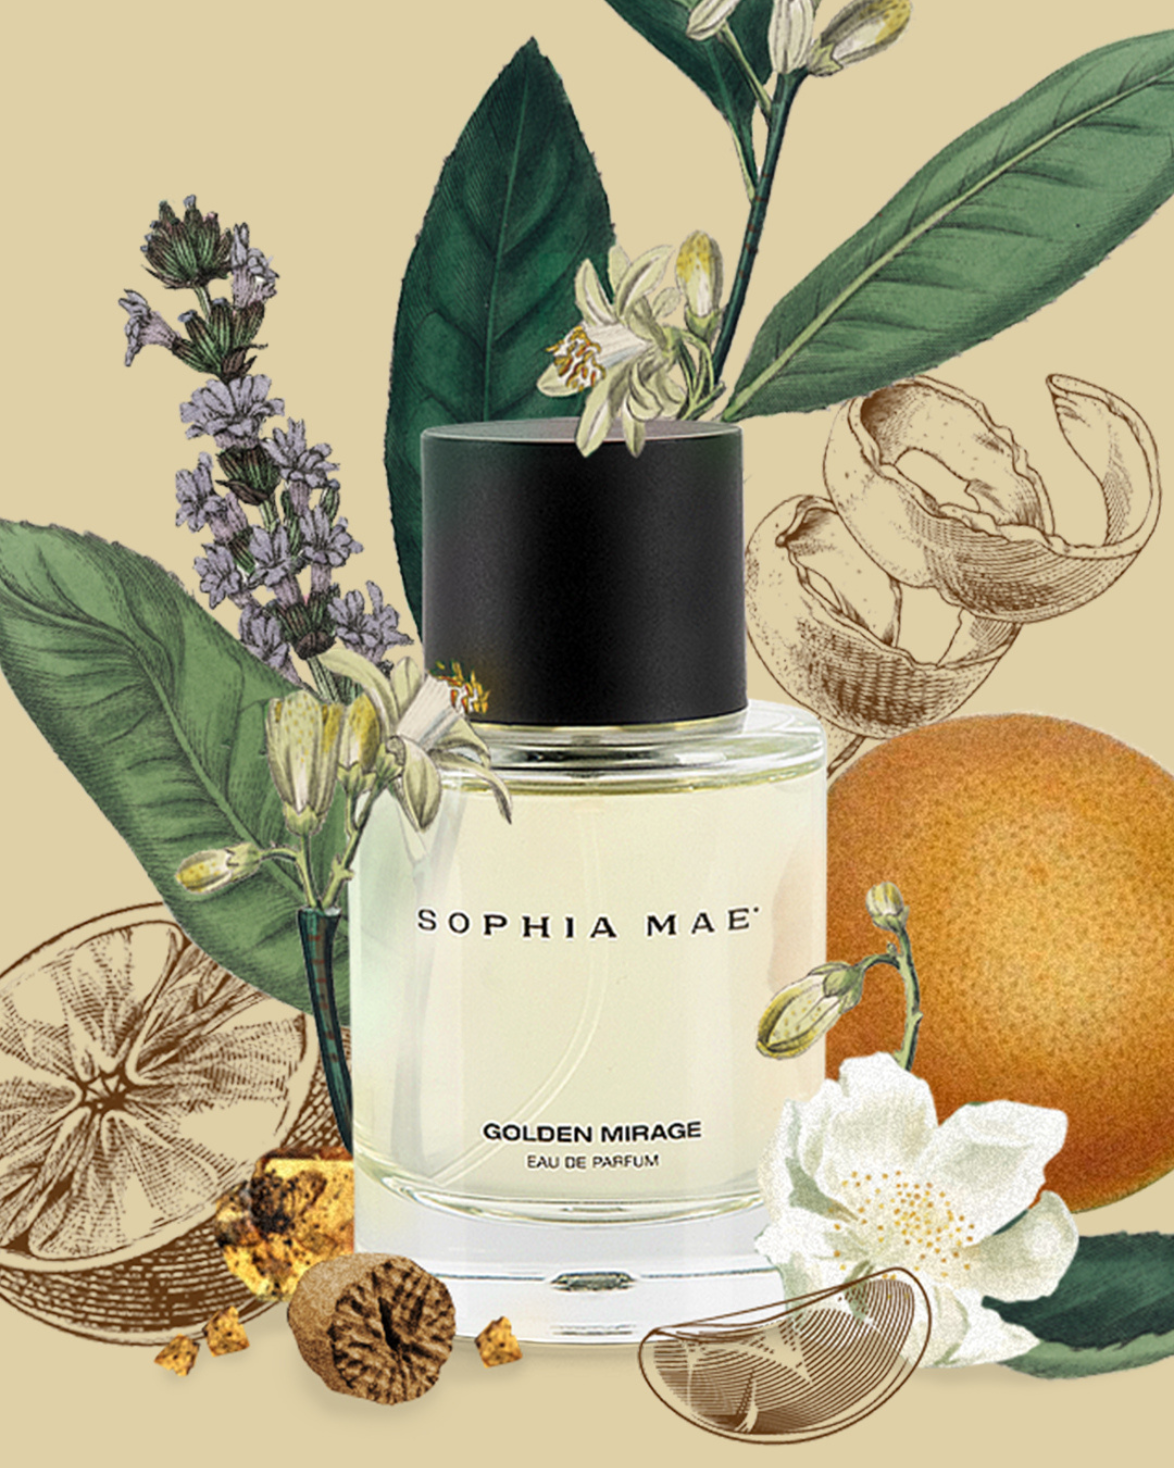 Sophia Mae Golden Mirage eau de parfum